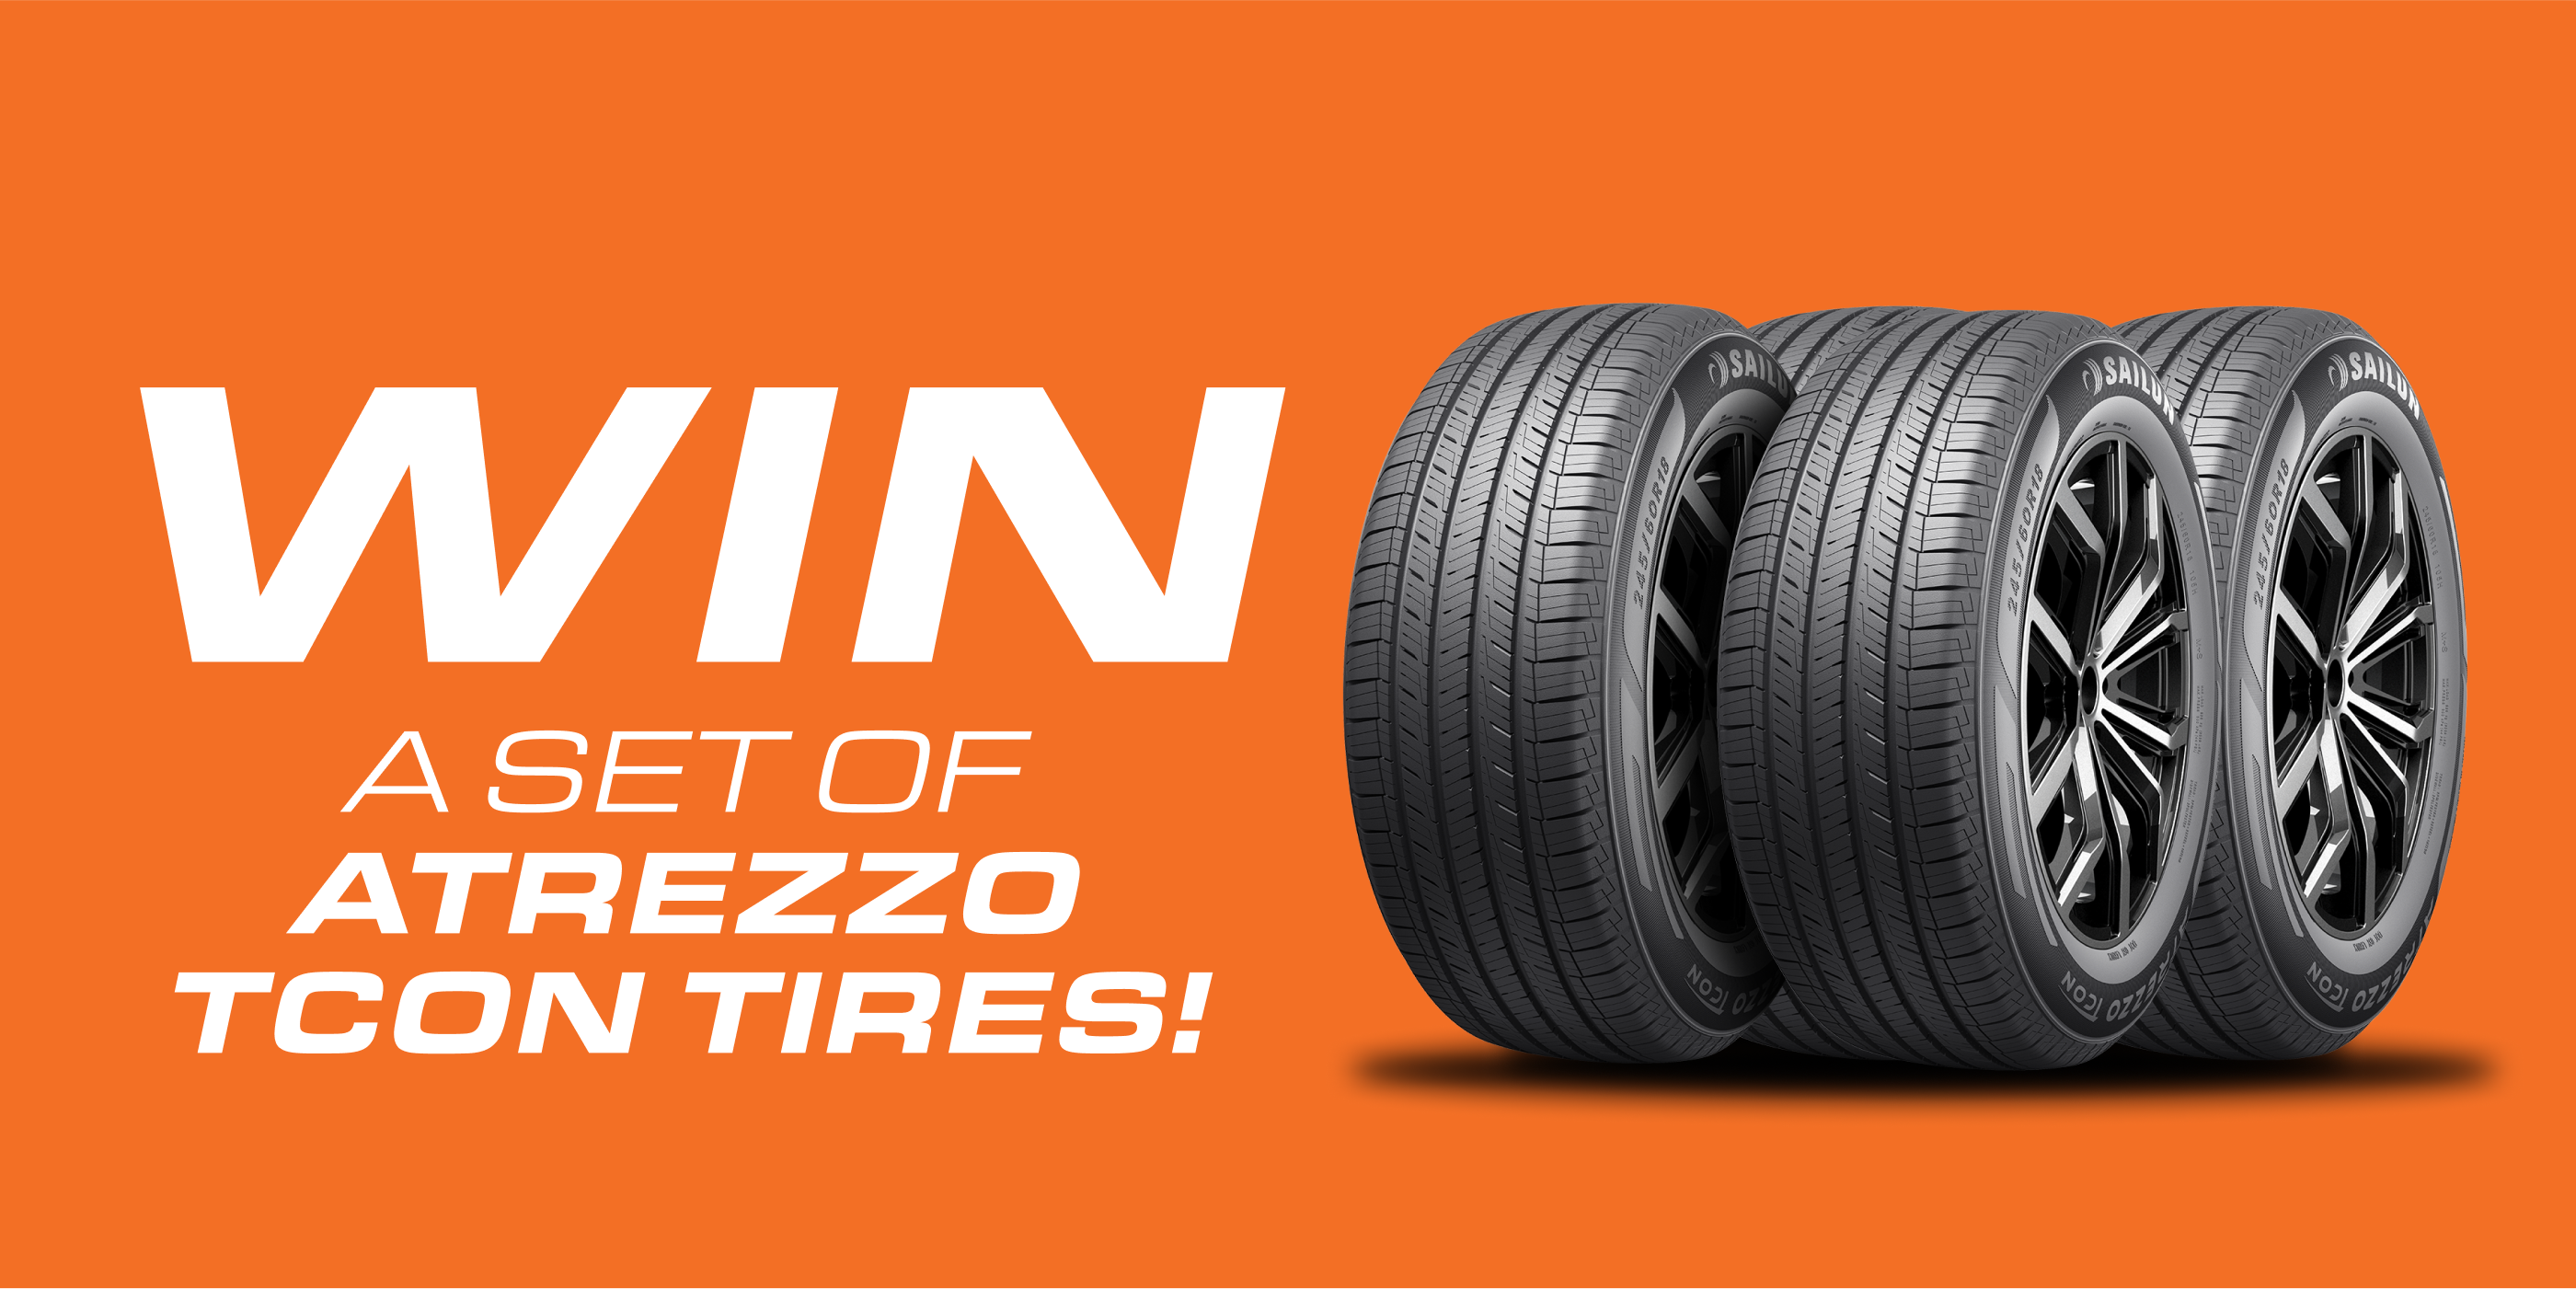 Win a set of Atrezzo TCON Tires! 